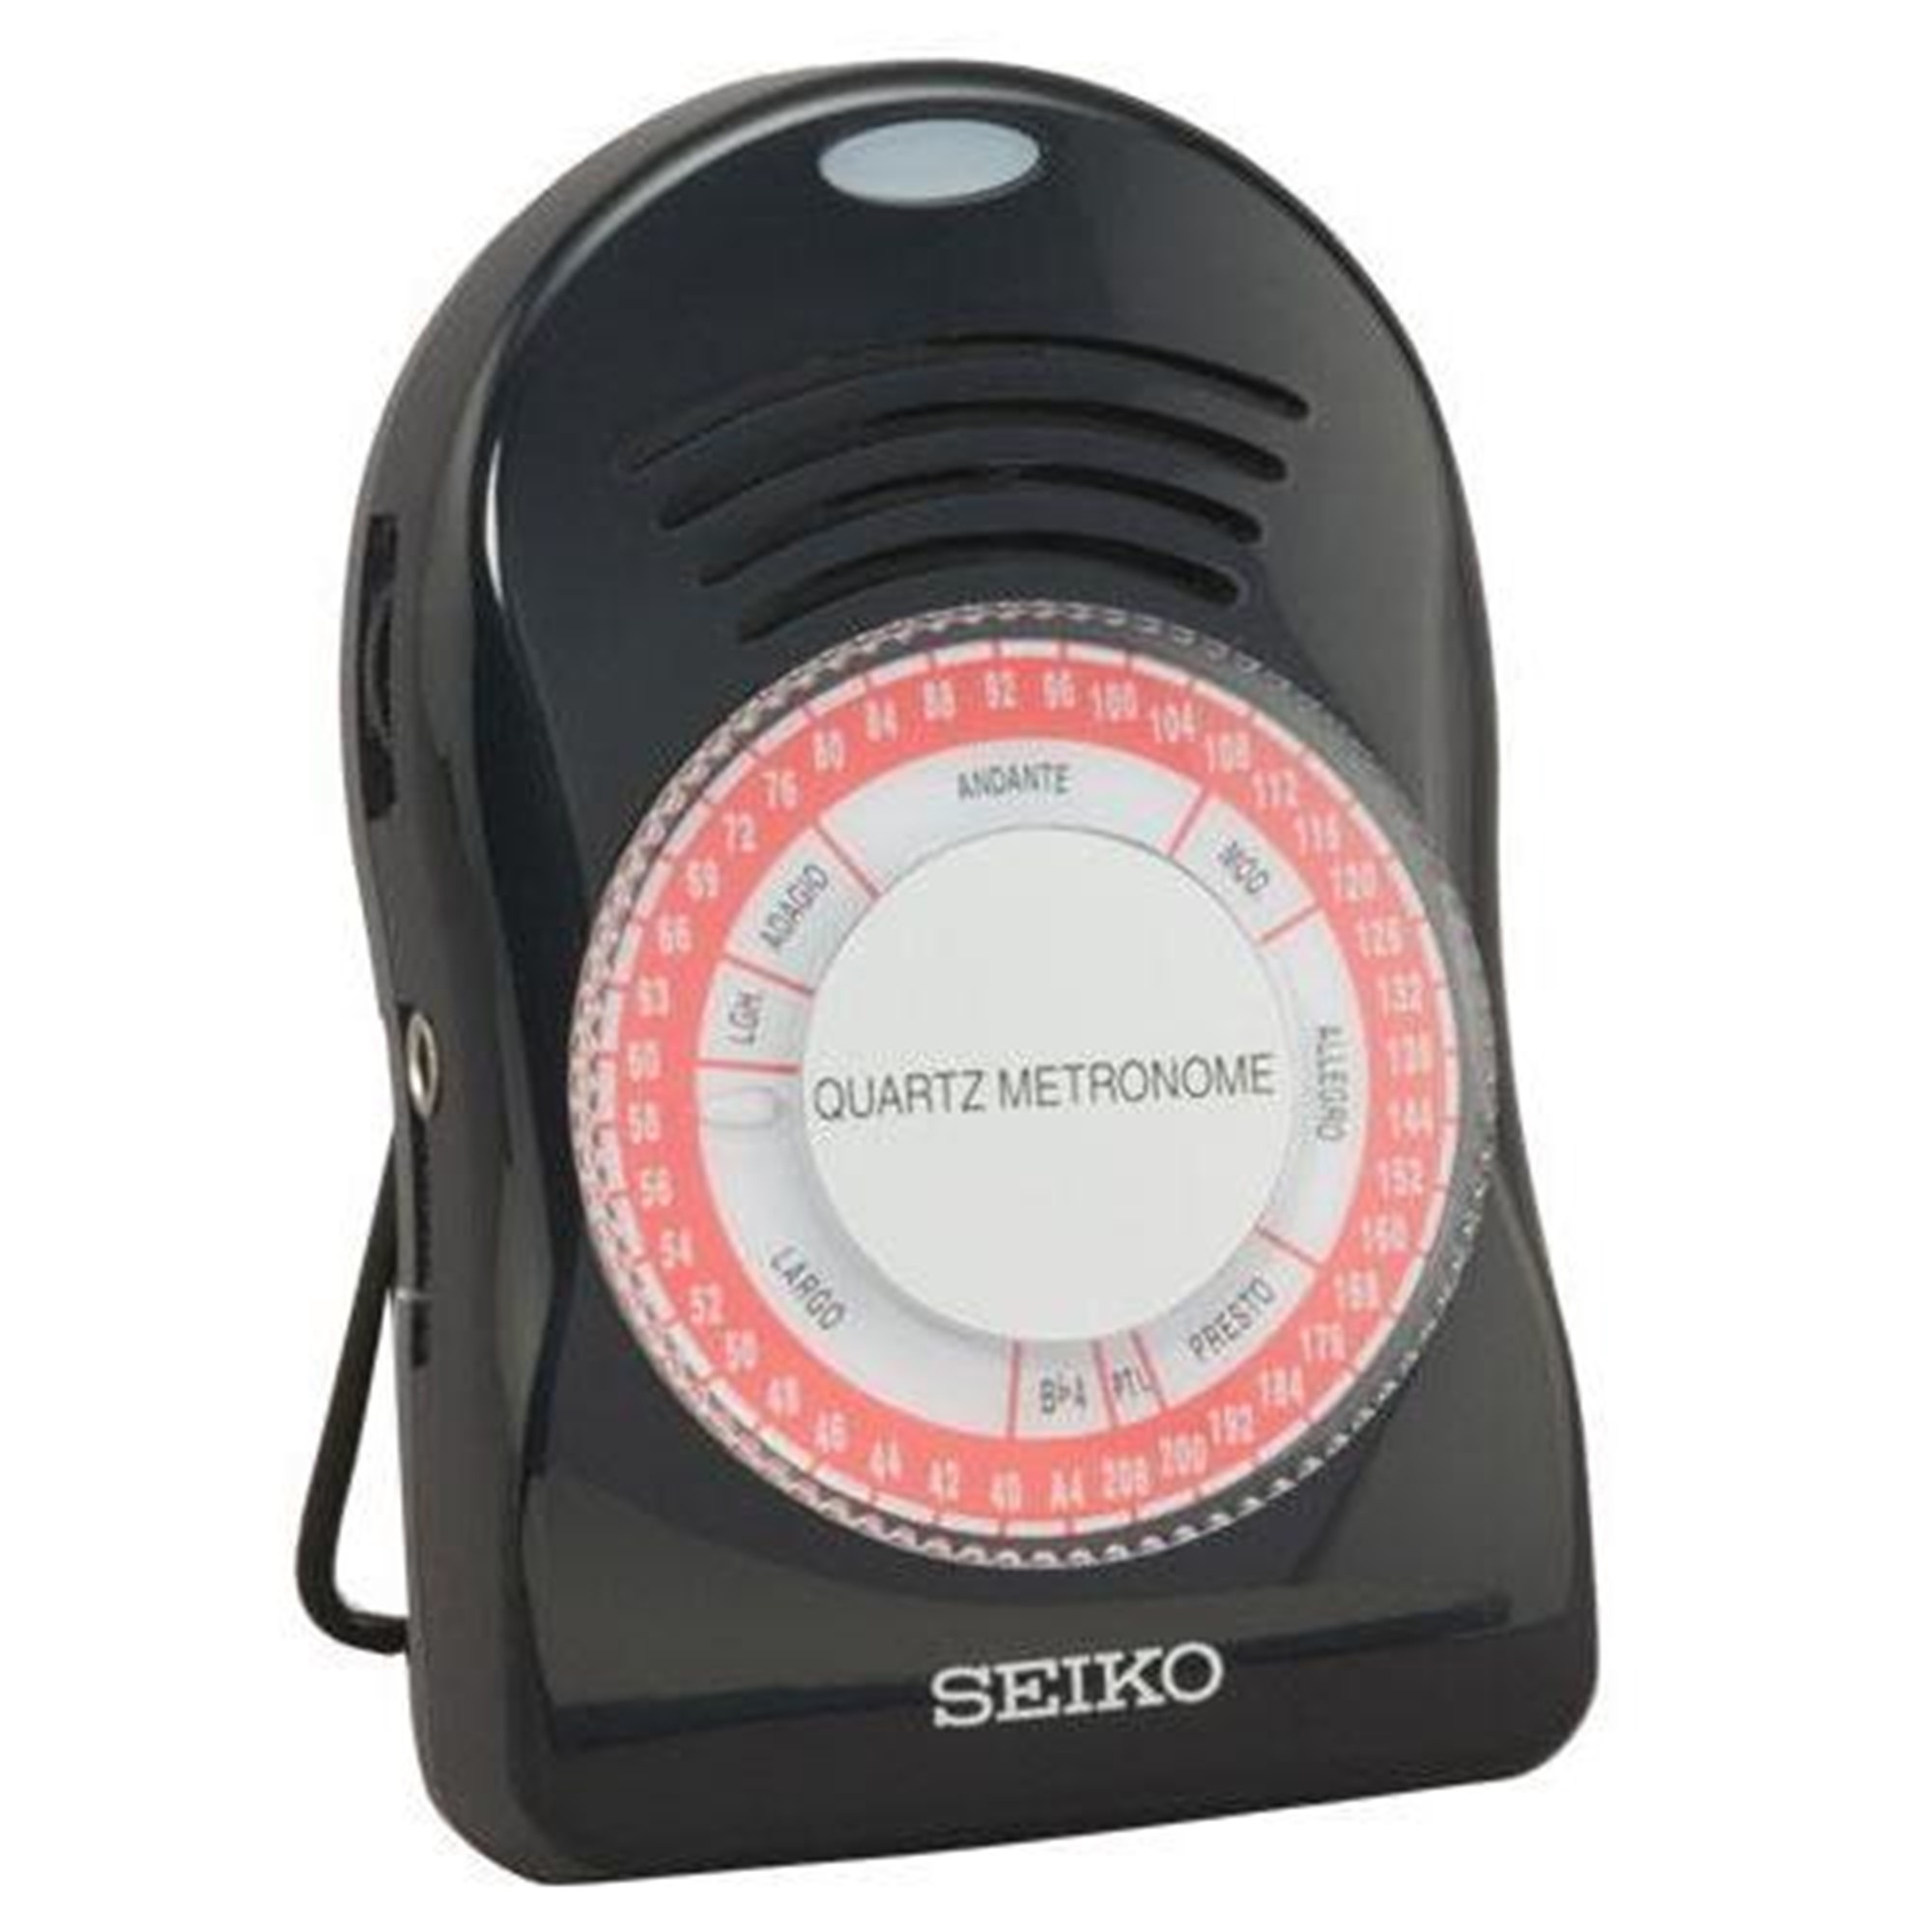 Seiko Quartz Metronome | HaB Direct